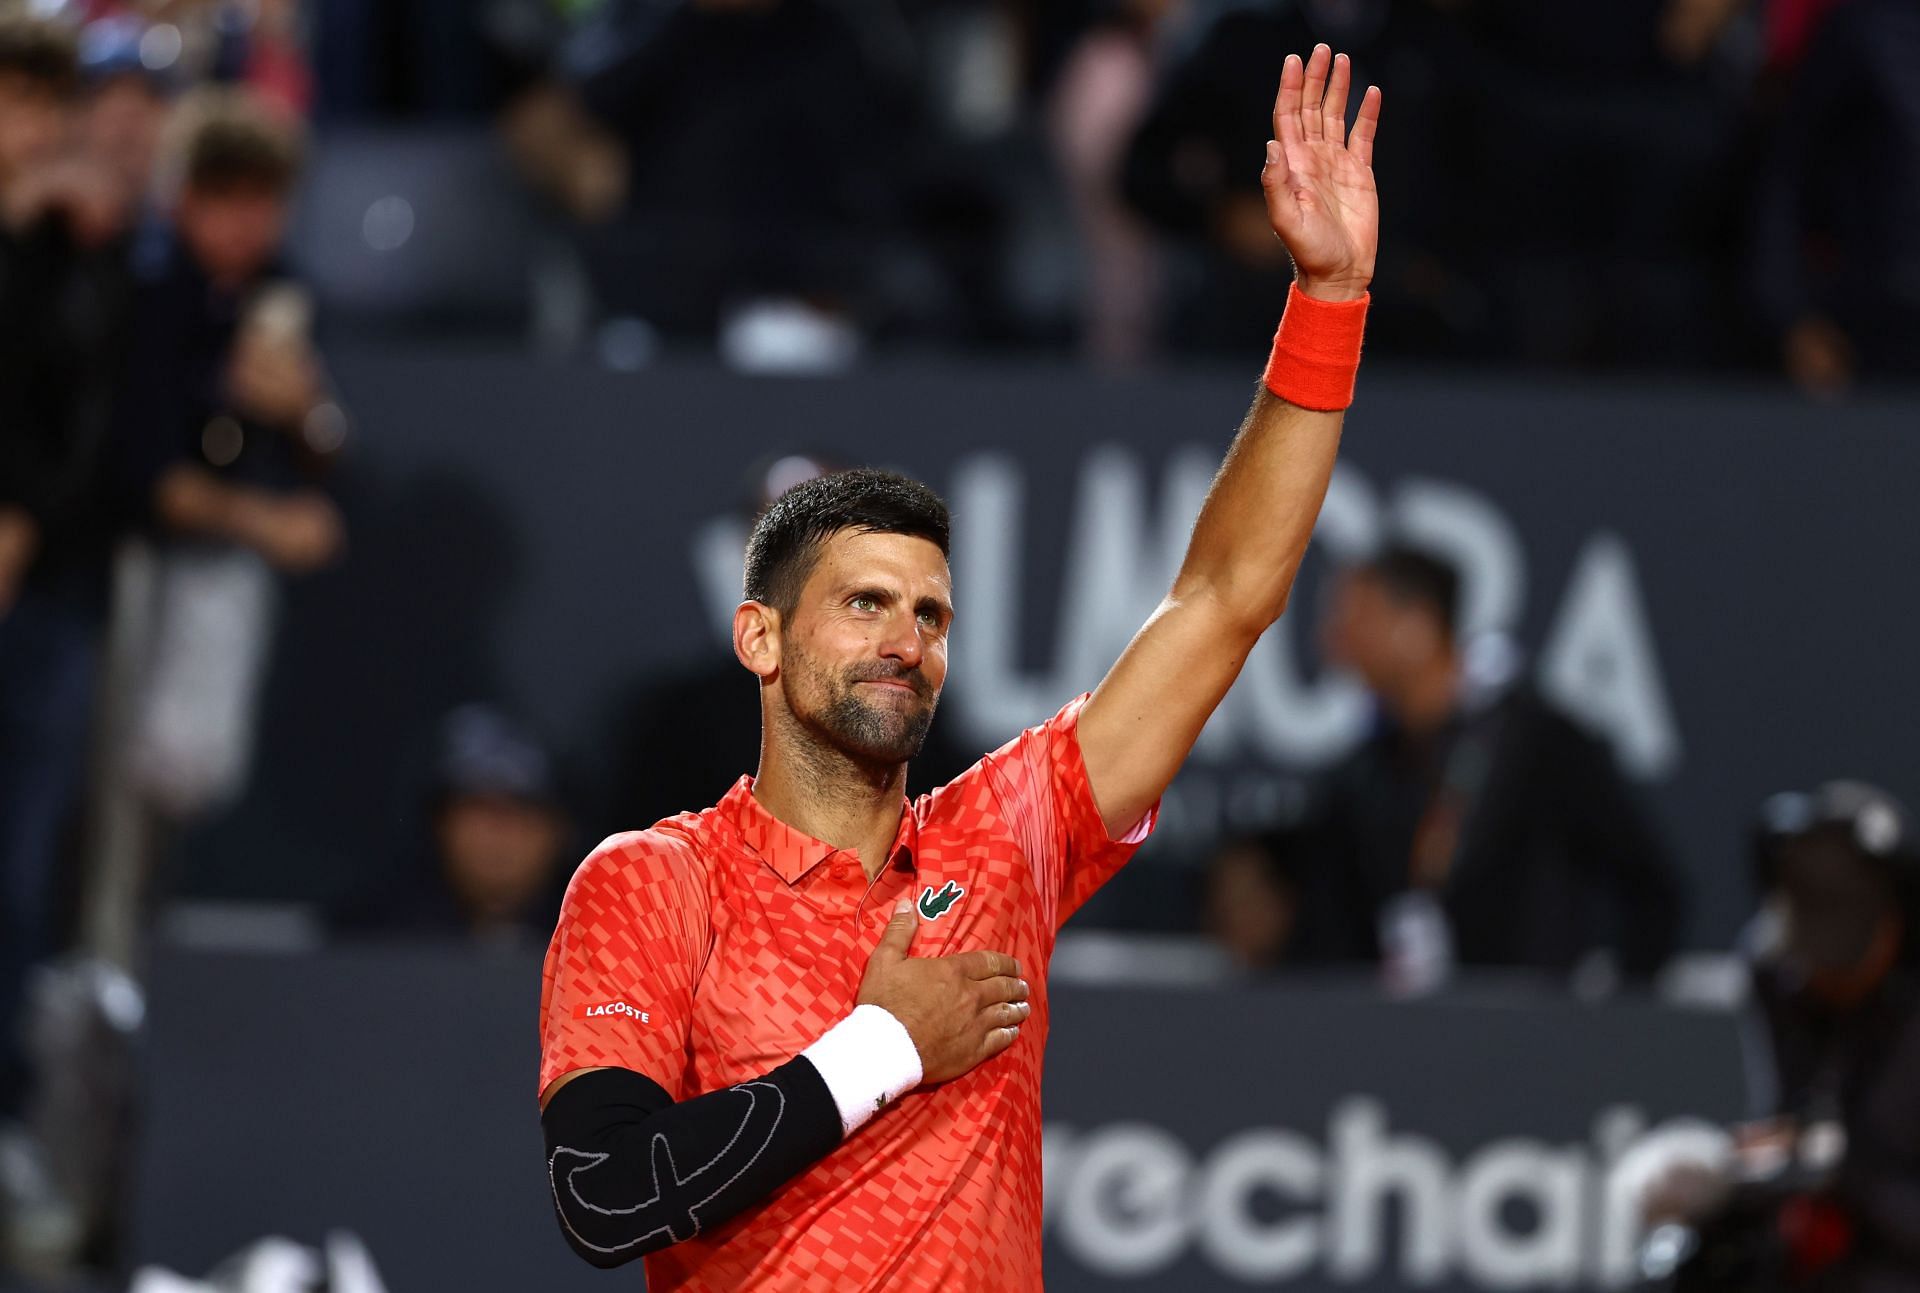 Novak Djokovics next match Opponent, venue, live streaming, TV channel and schedule Italian Open 2023, 4R